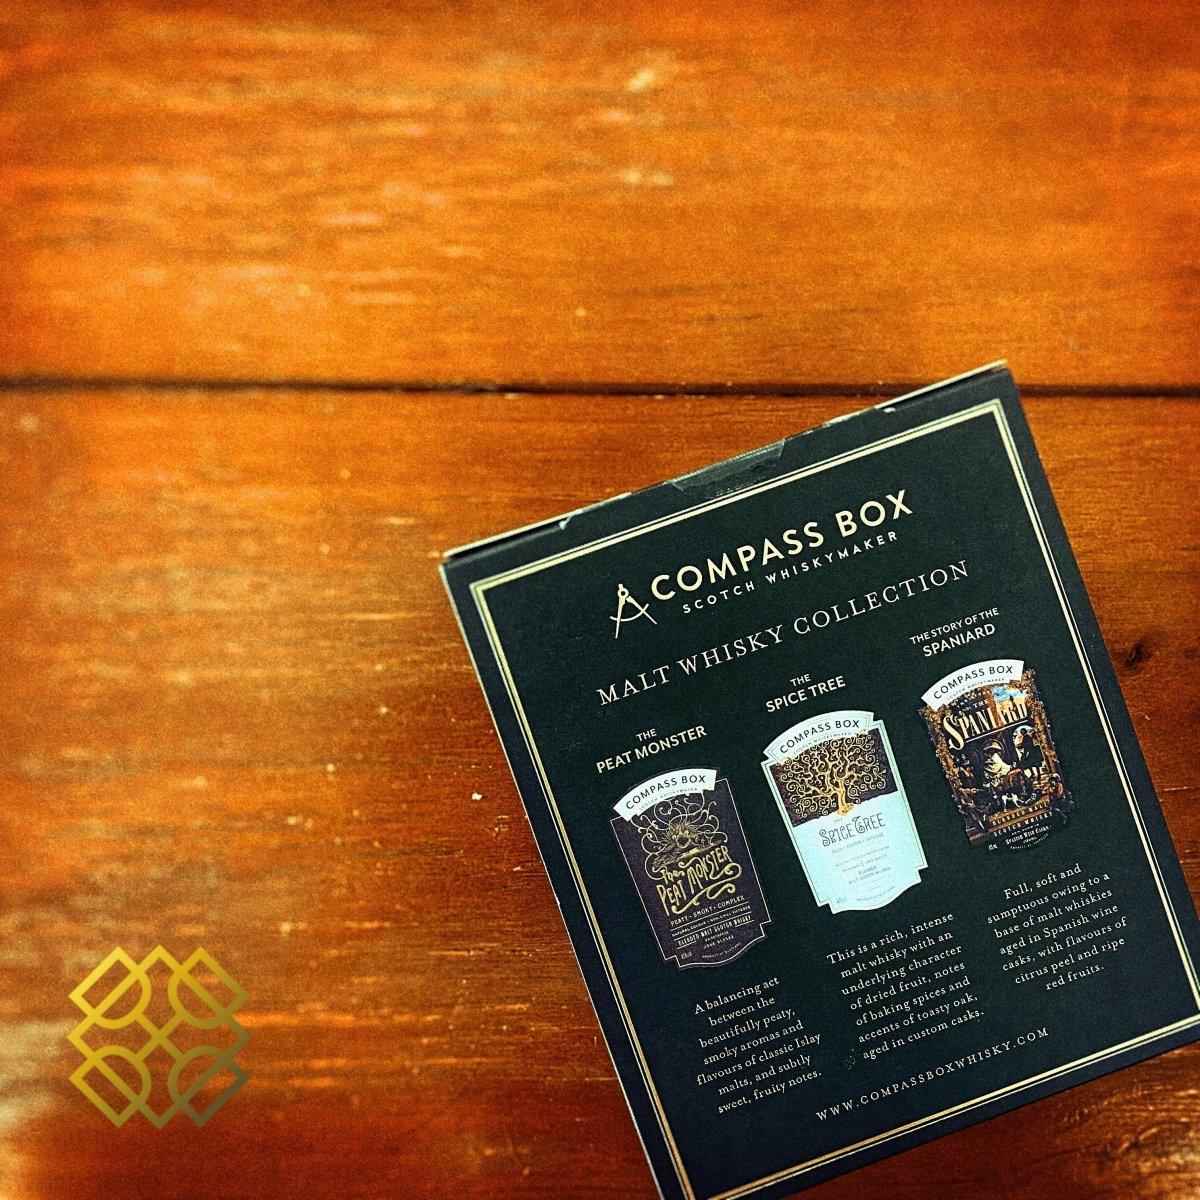 Compass box - Malt whisky collection mini-set (3 x 50ml)  The peat monster,The Spice Tree ,The Spaniard 50ml 威士忌, 2